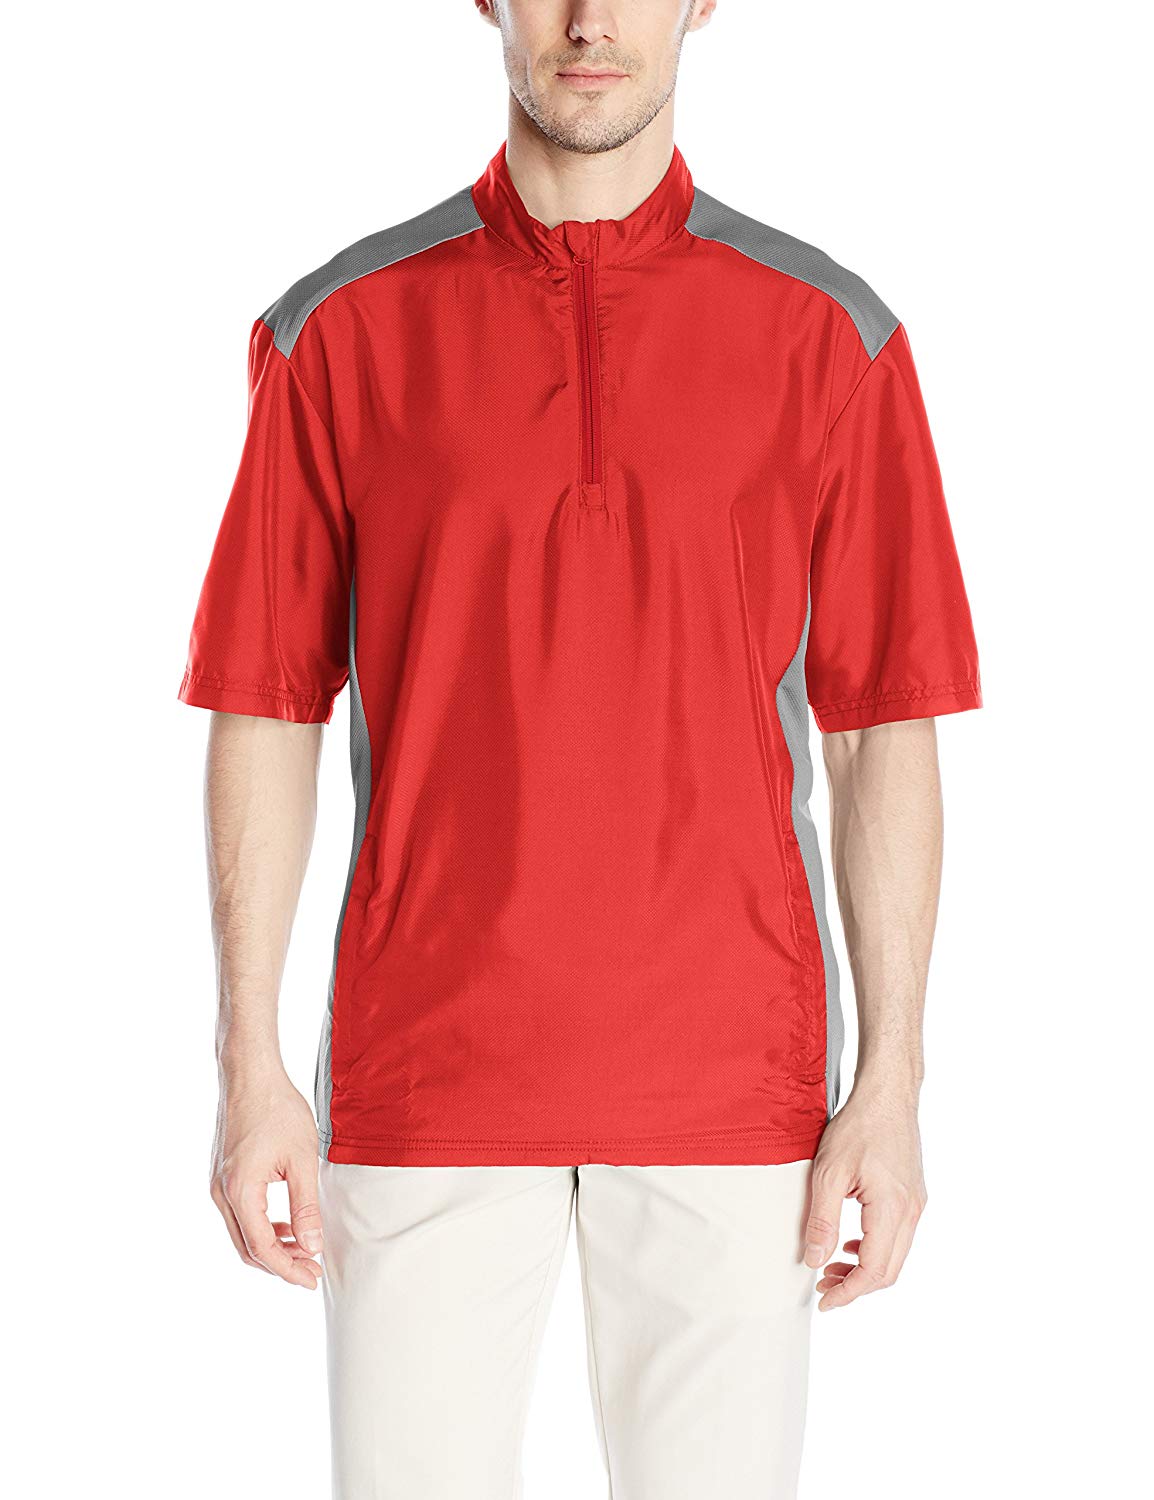 Adidas Mens Club Wind Short Sleeve Golf Jackets